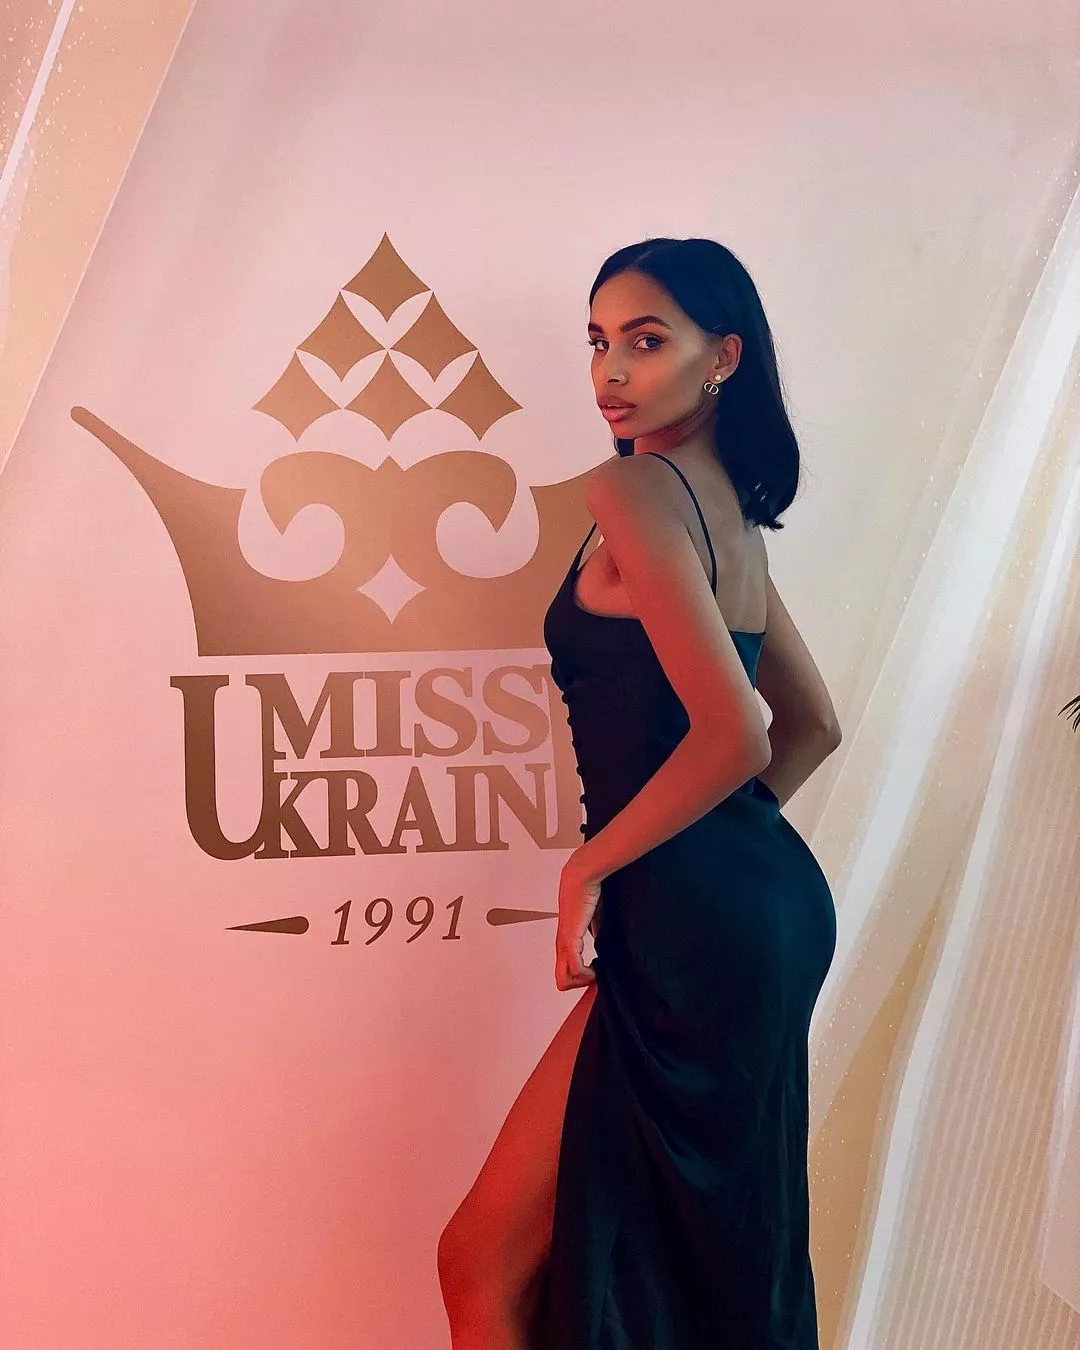 Нантіна Дрончак, учасниця "Міс Україна 2021"